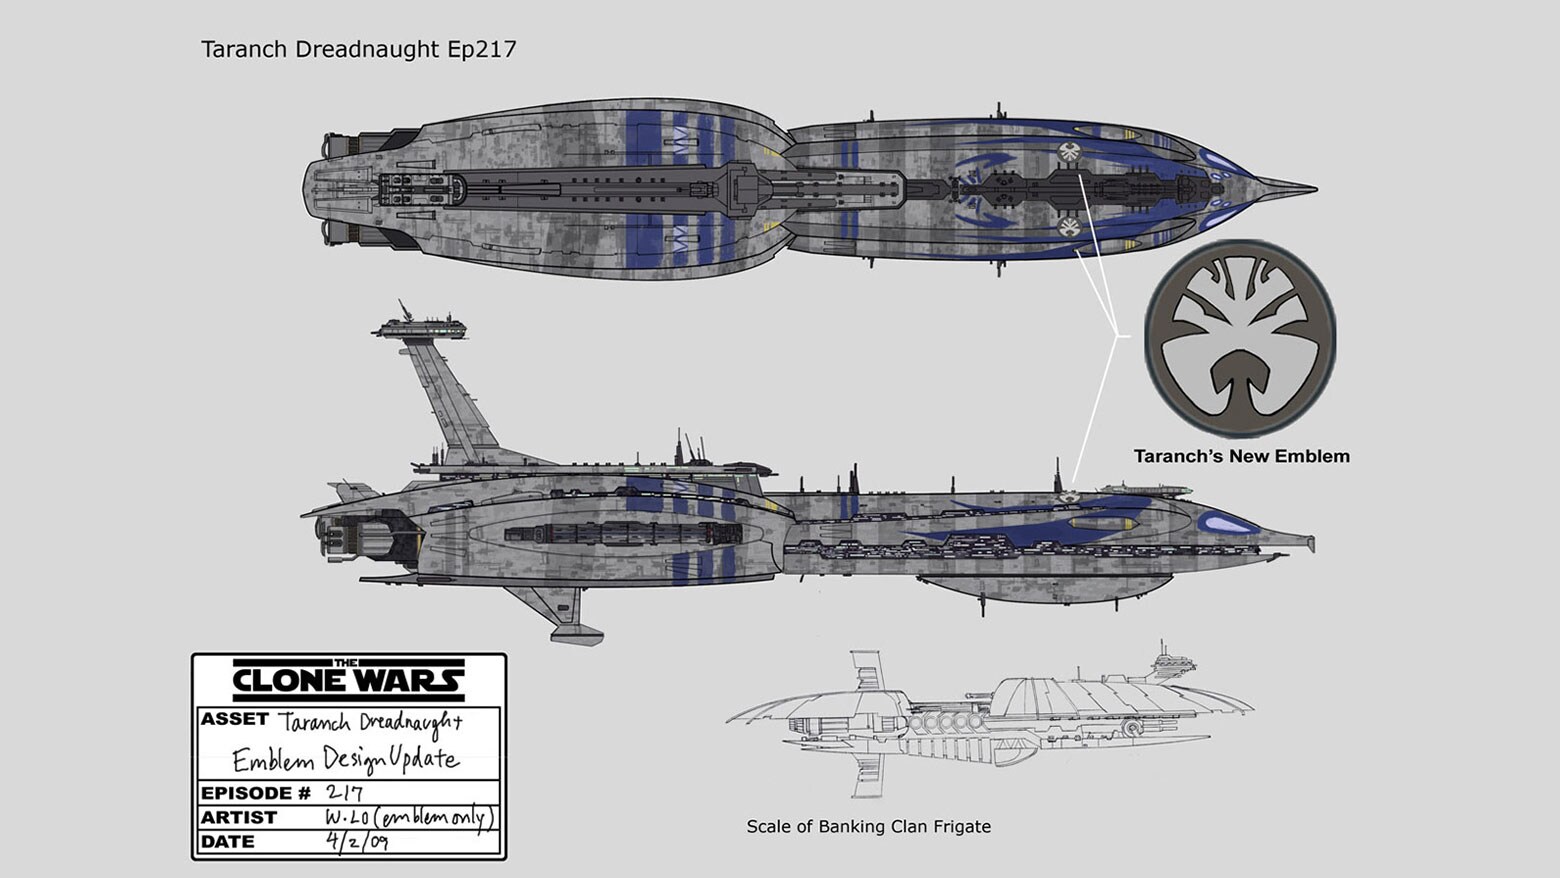 star wars separatist ships